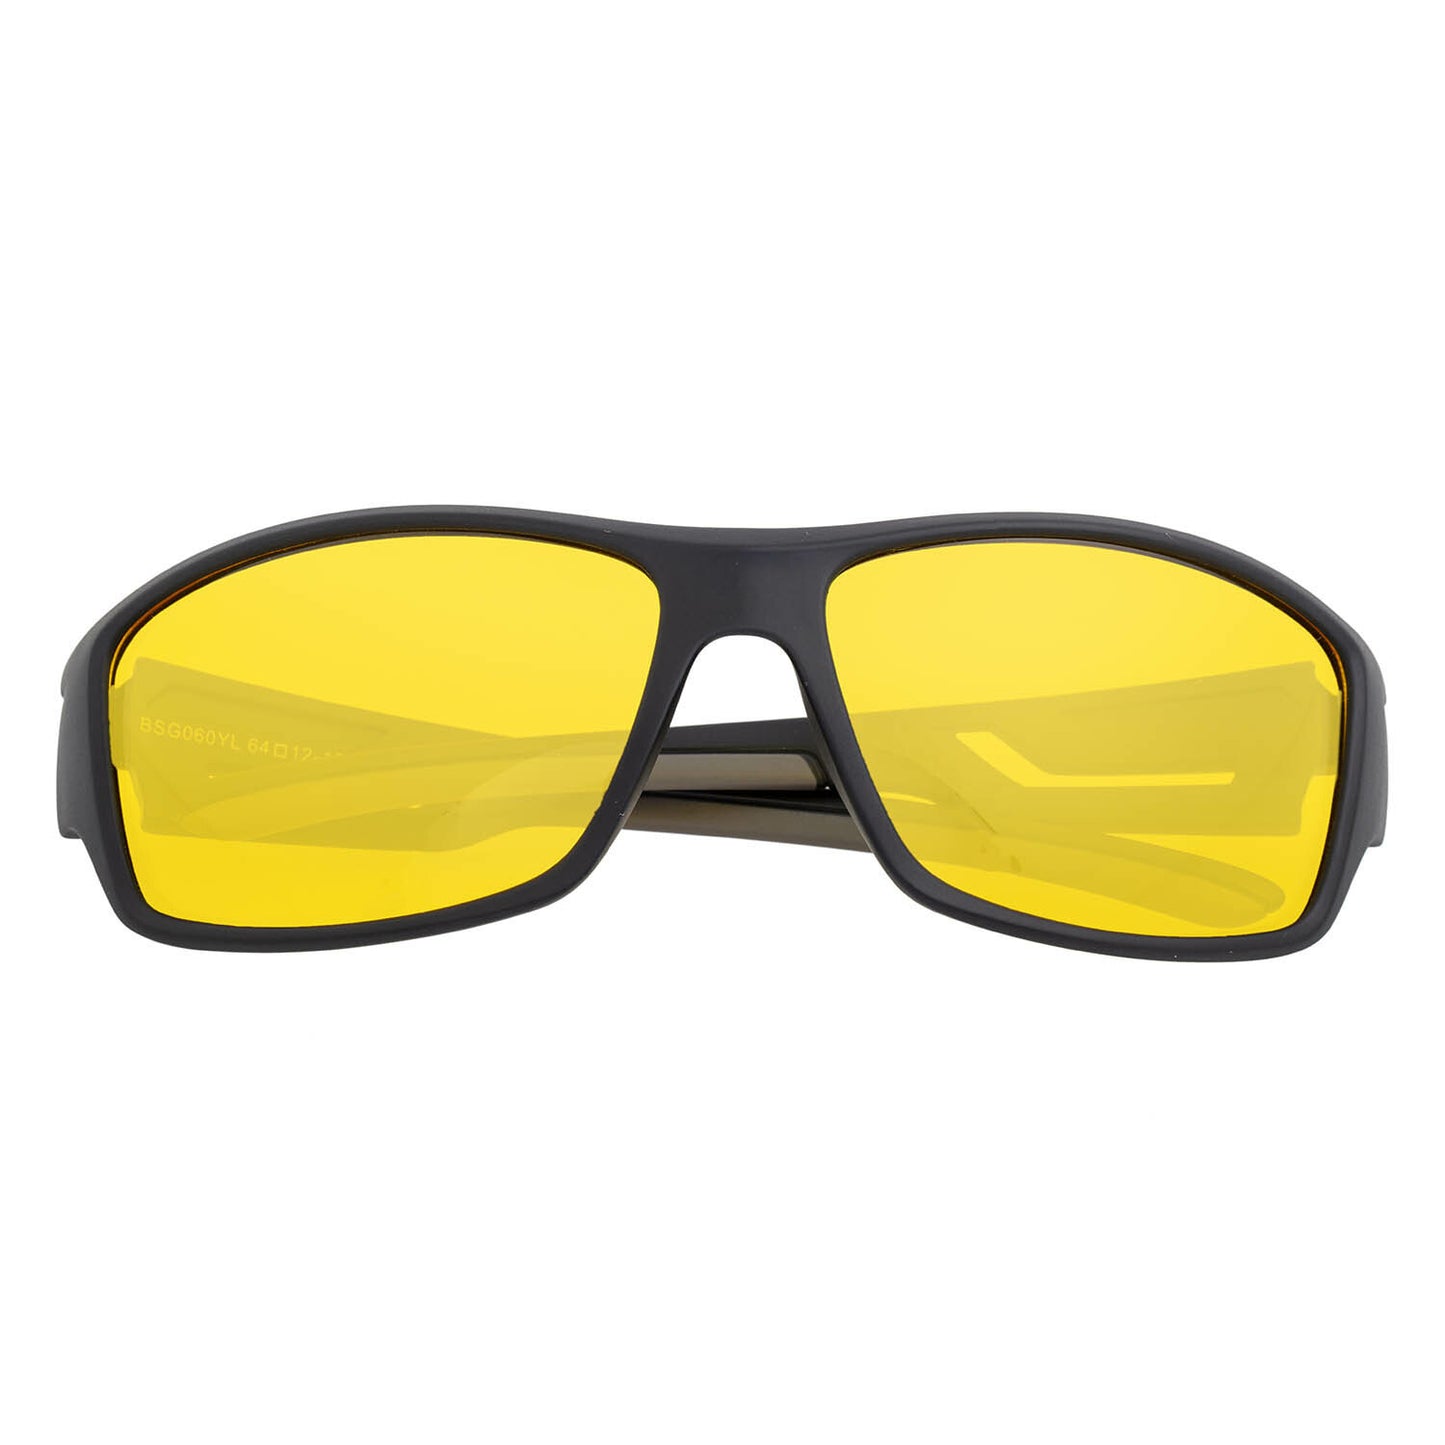 Aquarius Polarized Sunglasses - Black + Yellow